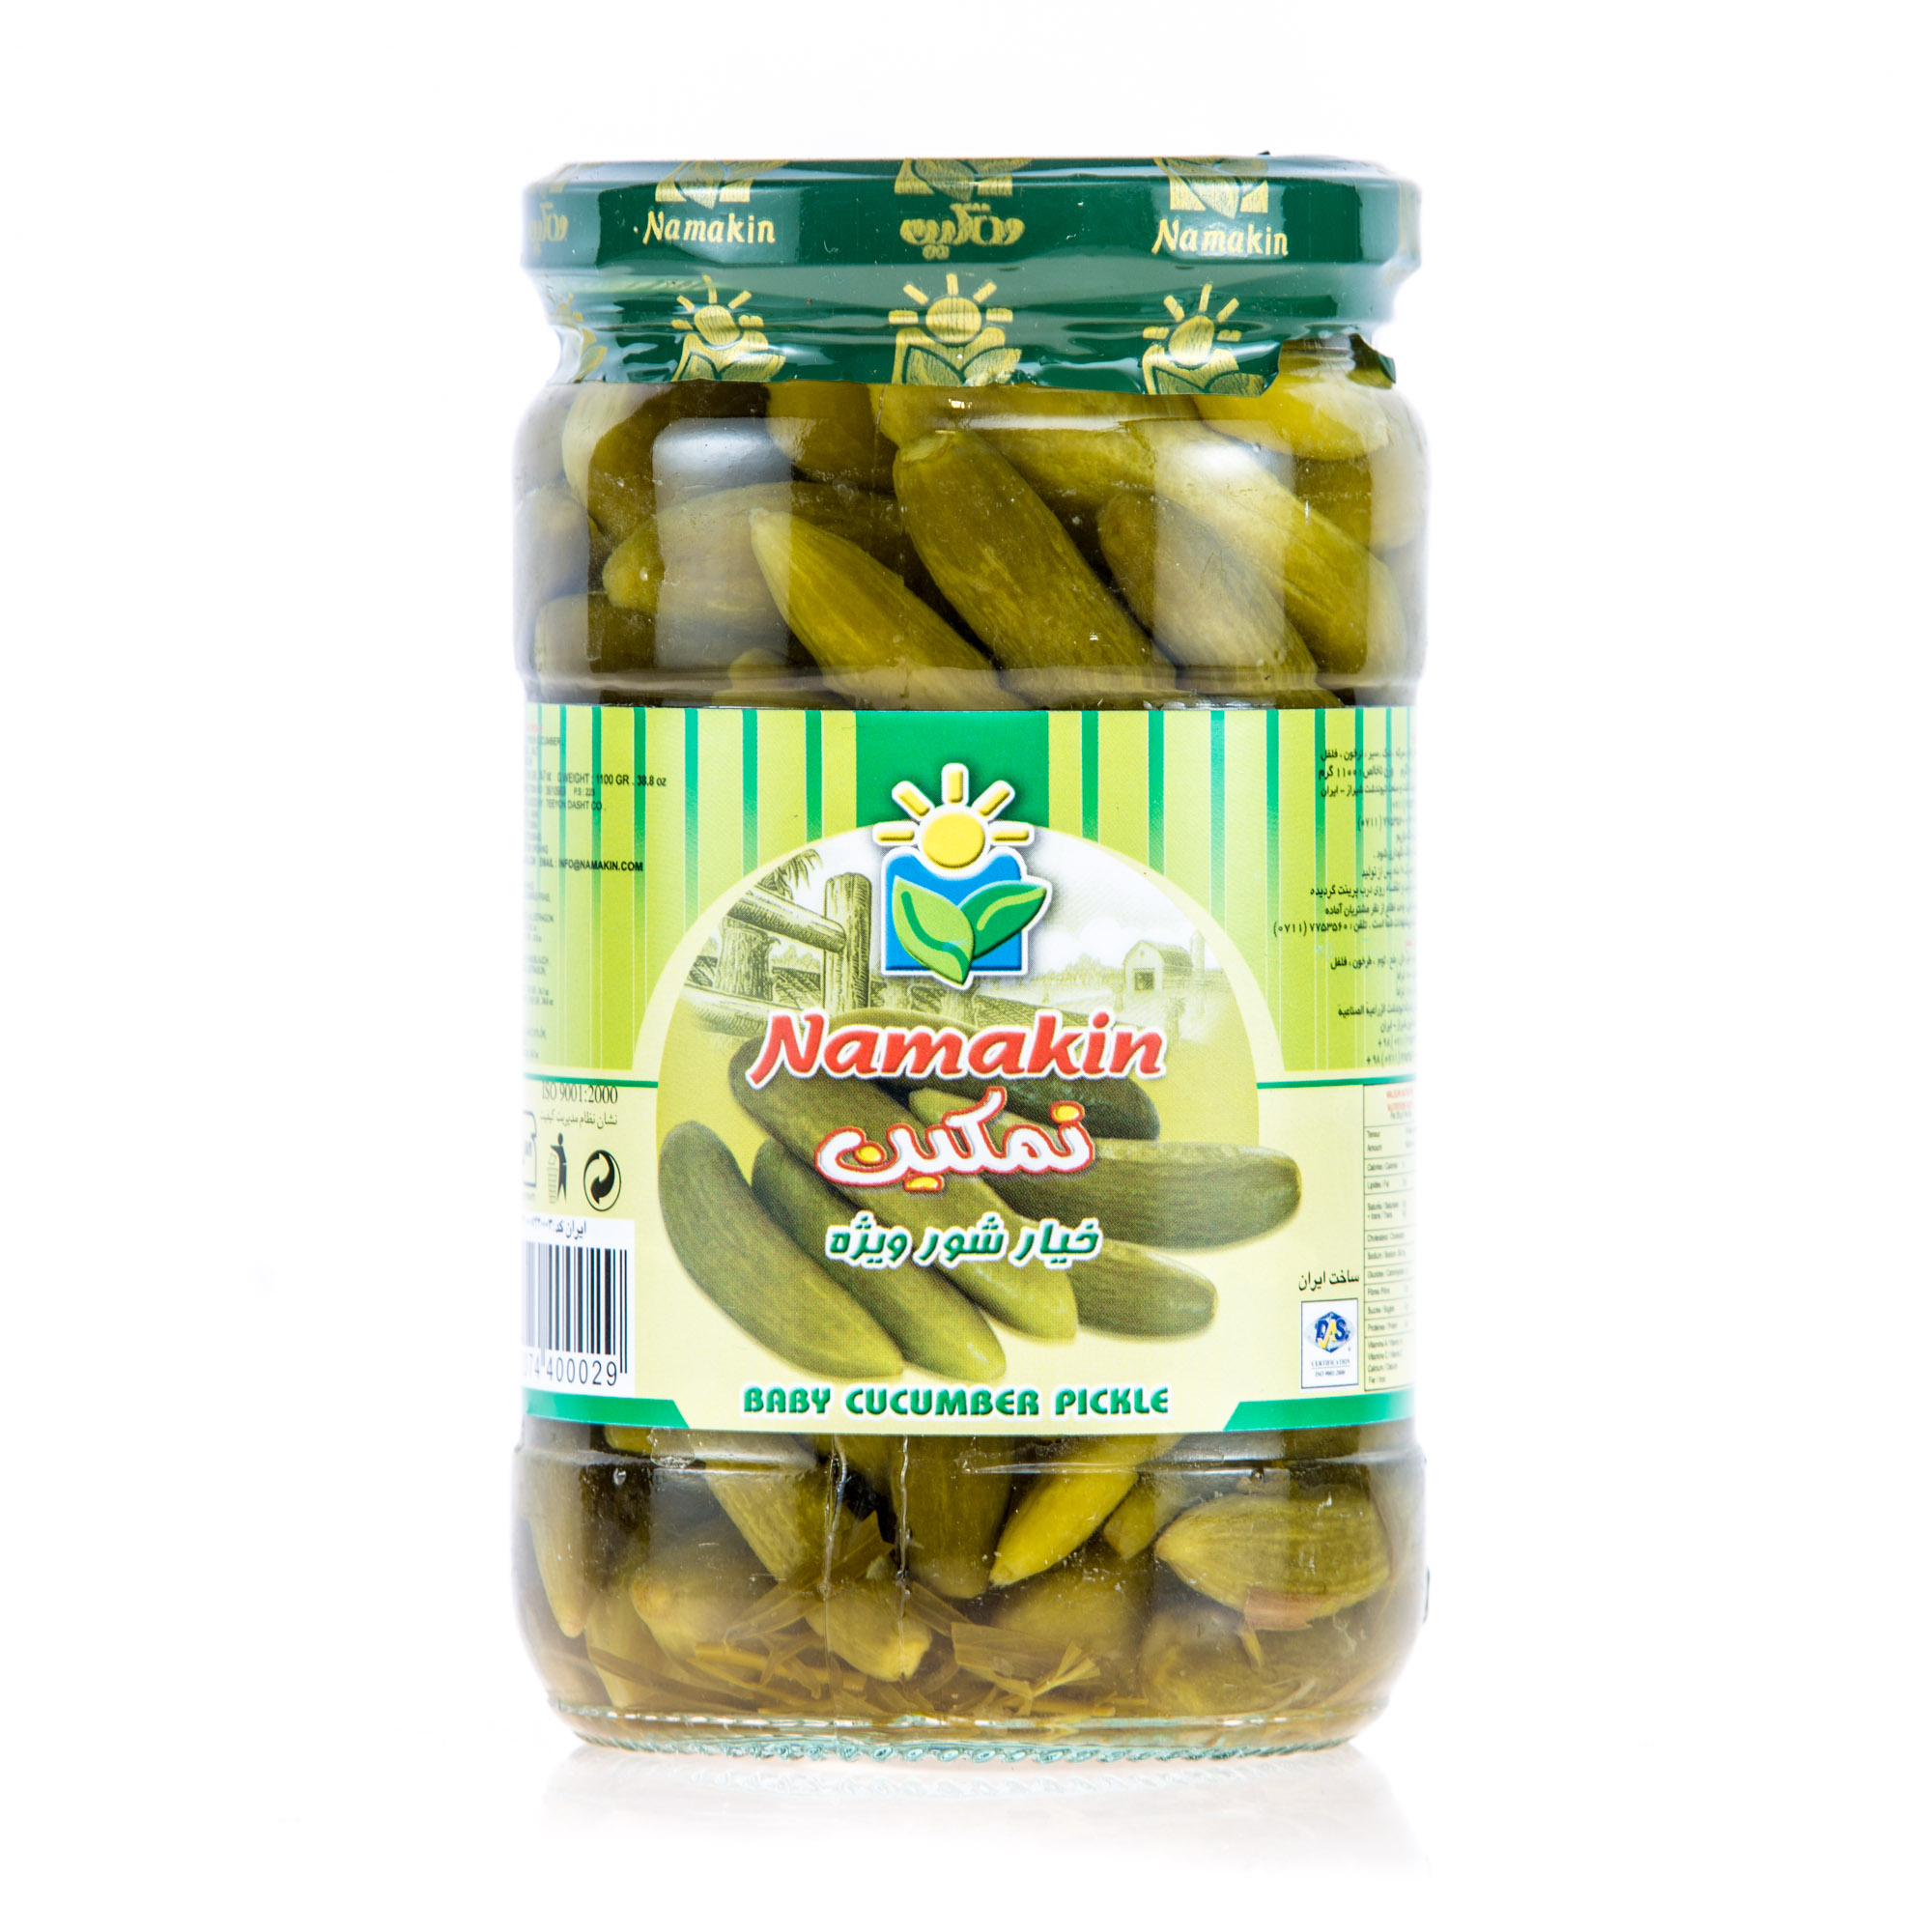 Namakin Baby Cucumber Pickles 1.1kg $3.33 – Omara Imports & Exports